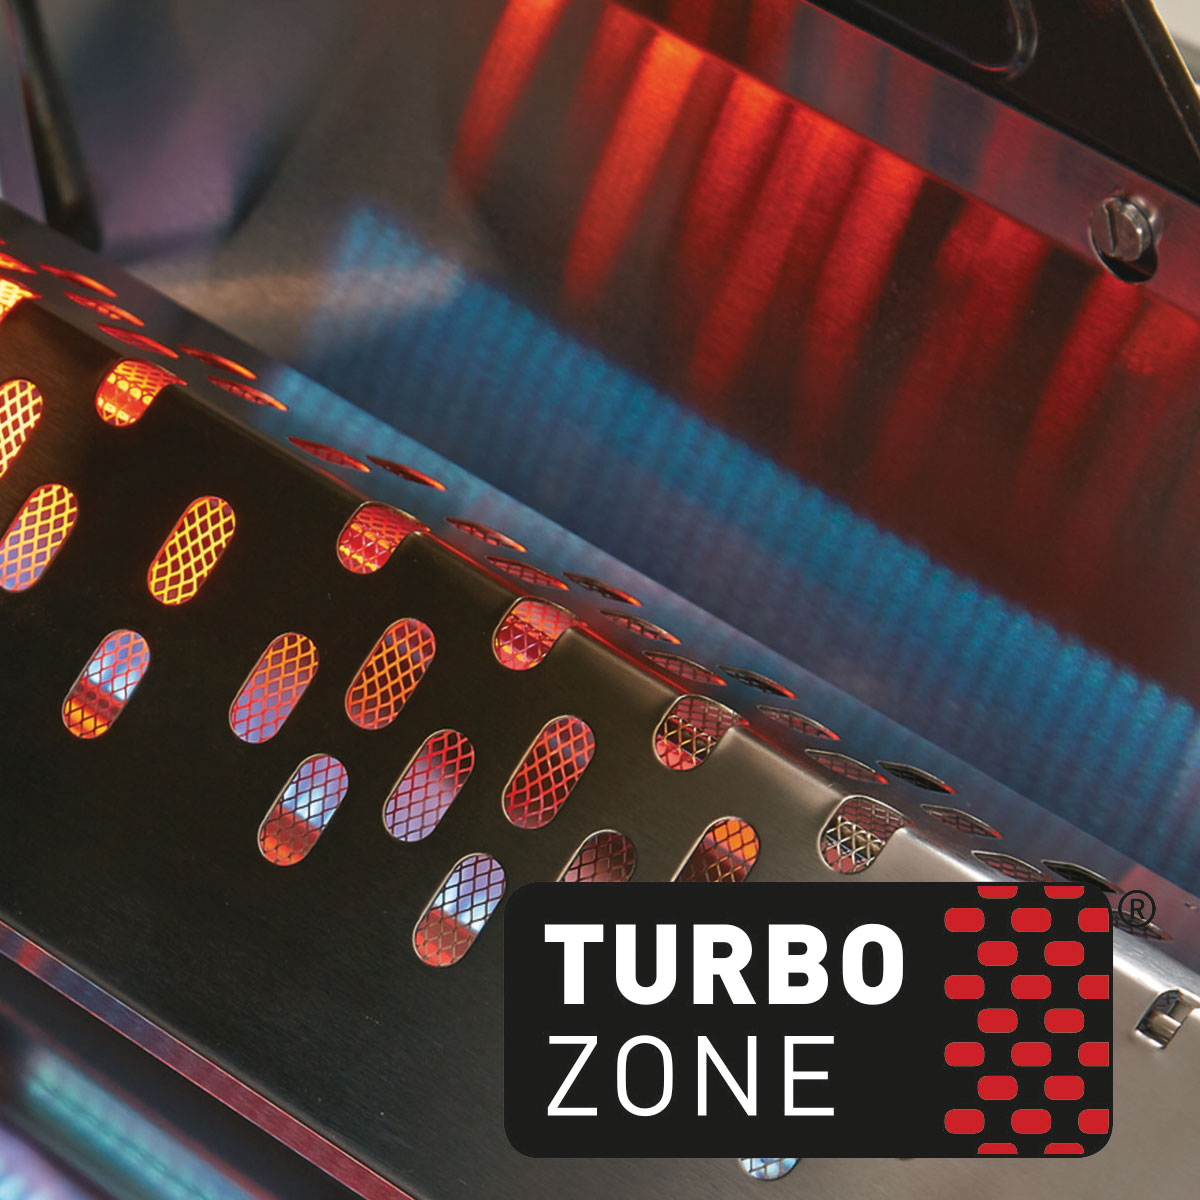 Enders Monroe Pro X 3 S Turbo Zone